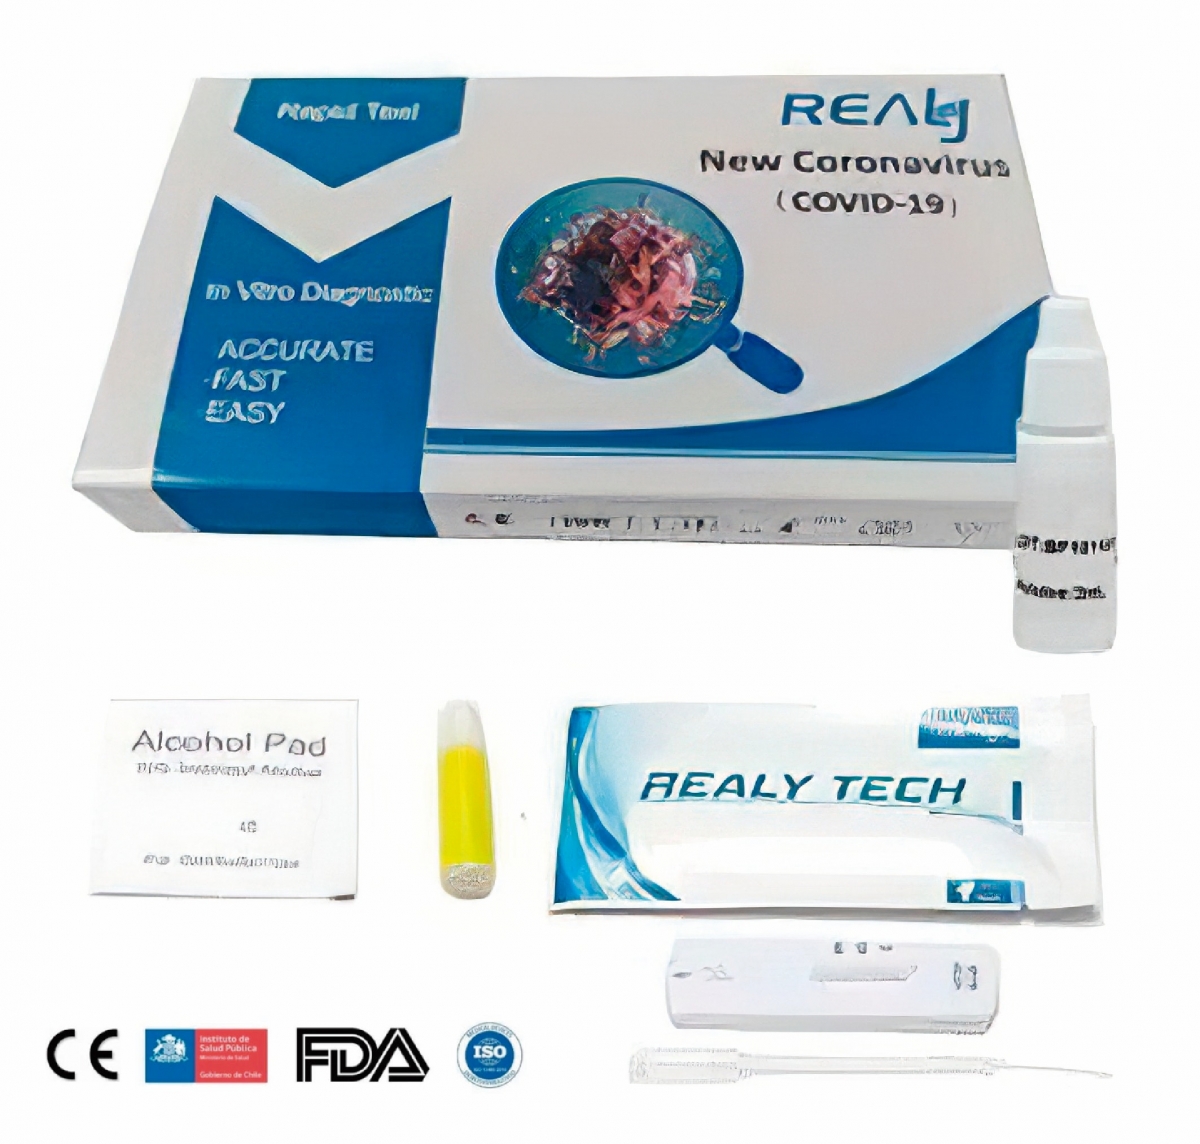 Test sierologico rapido Covid19 IgG/IgM - Realy Tech 